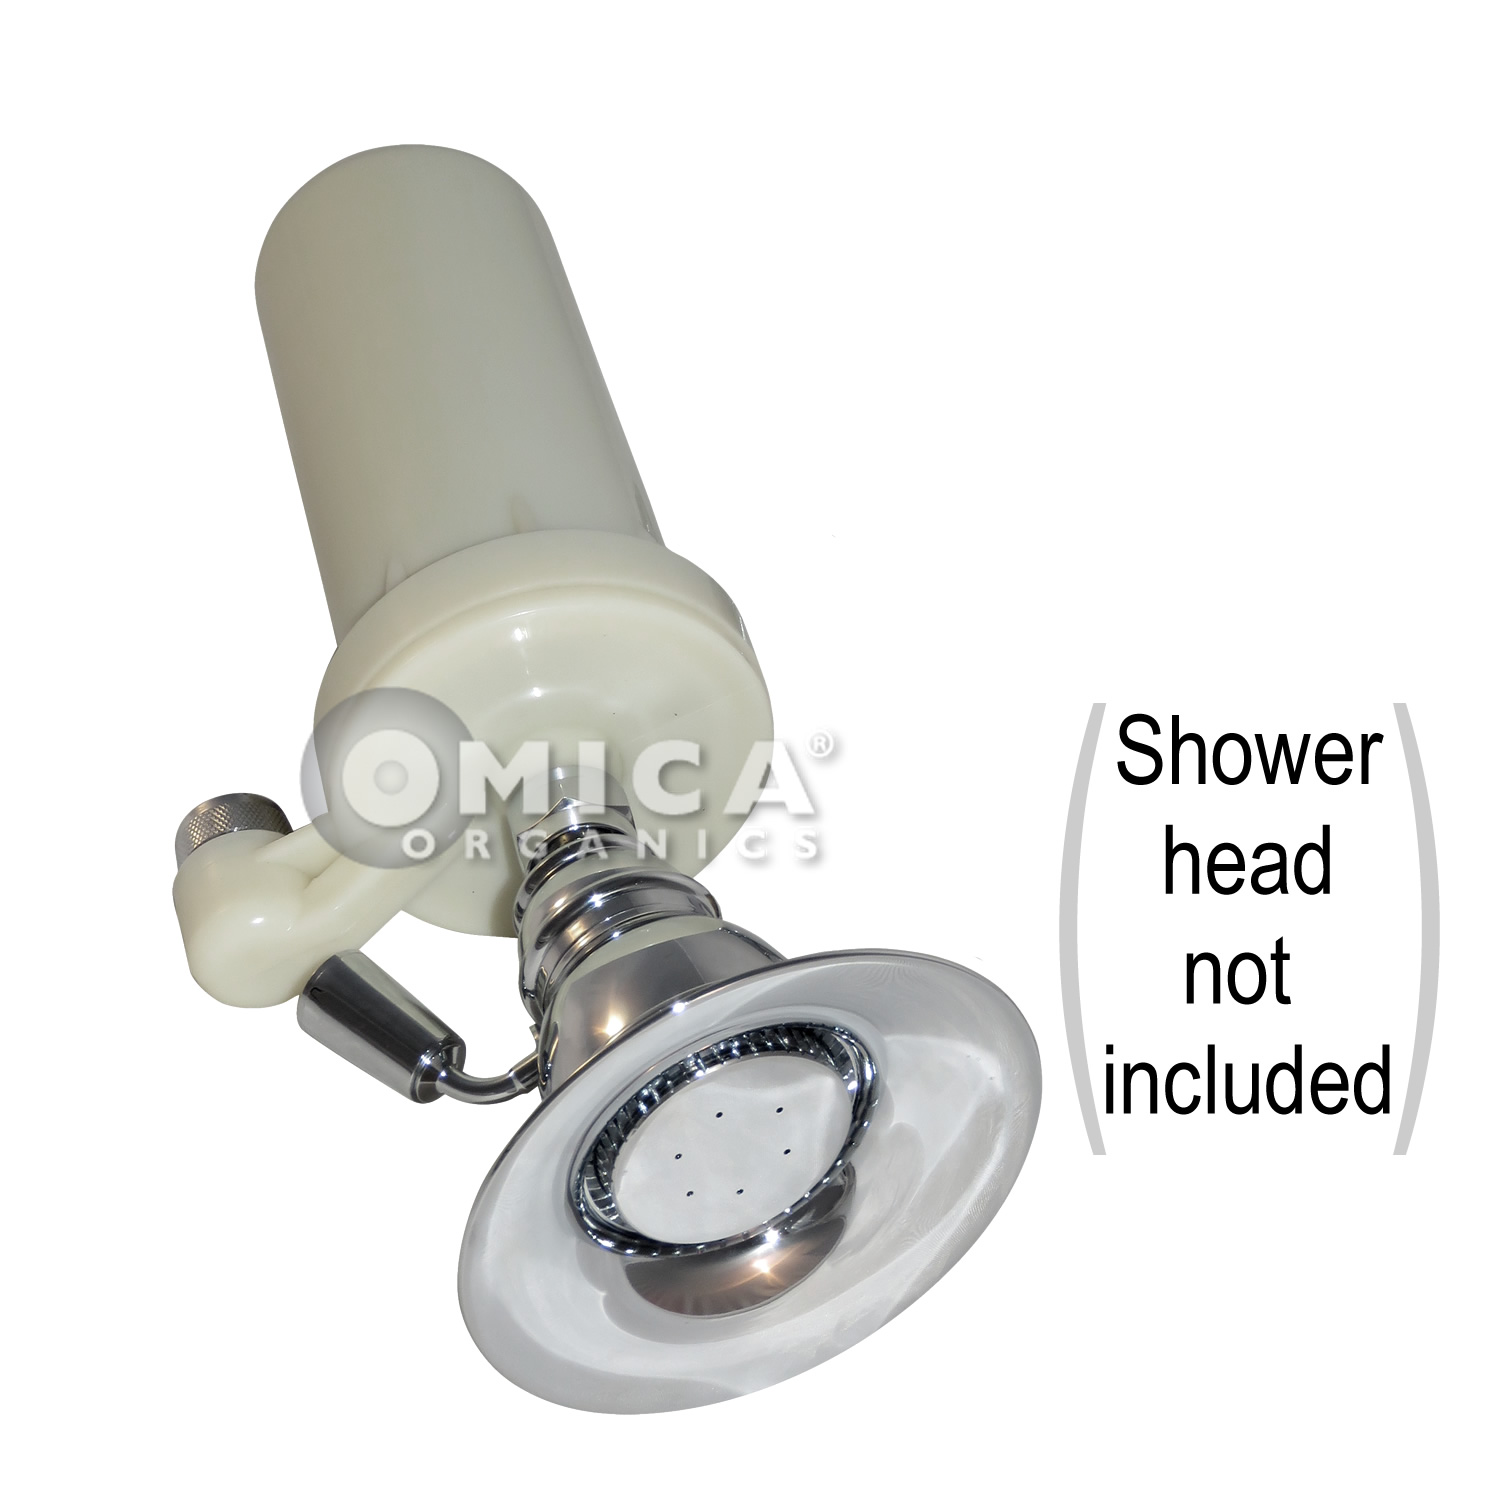 Omica Shower Filter - Omica Organics